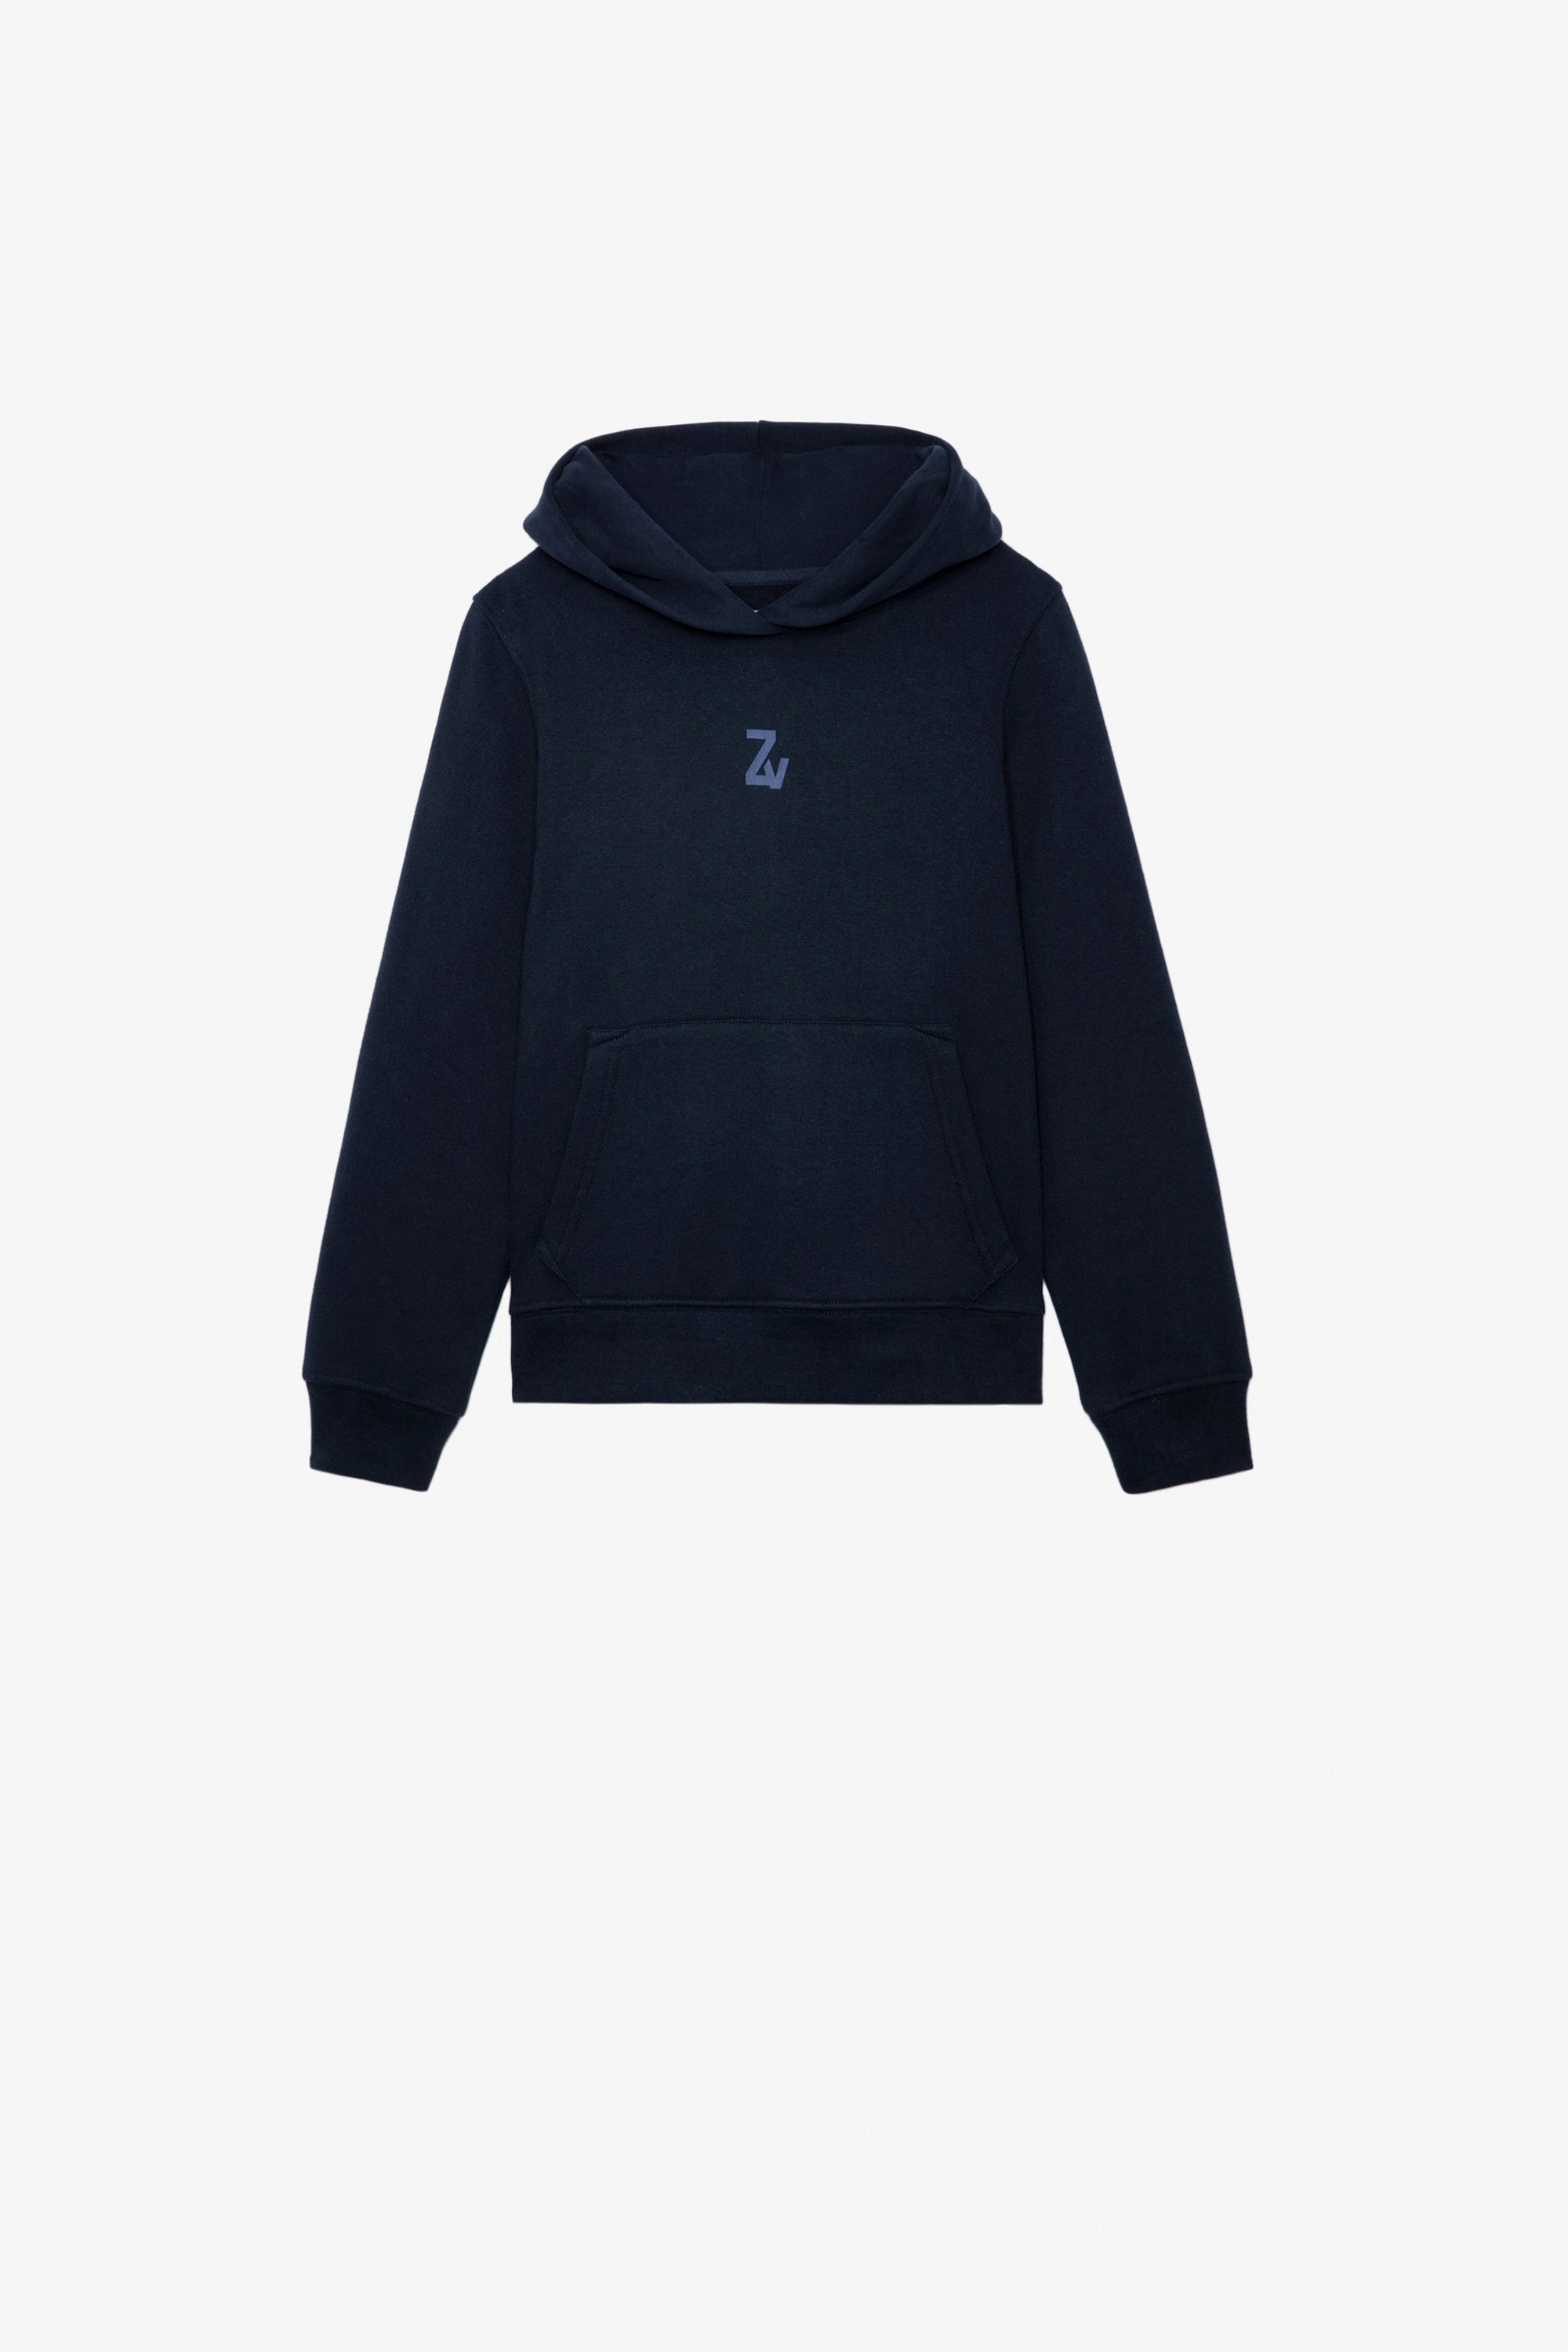 Sanchi Boys’ Sweatshirt - Boys’ navy blue cotton fleece hoodie with ZV logo and print.